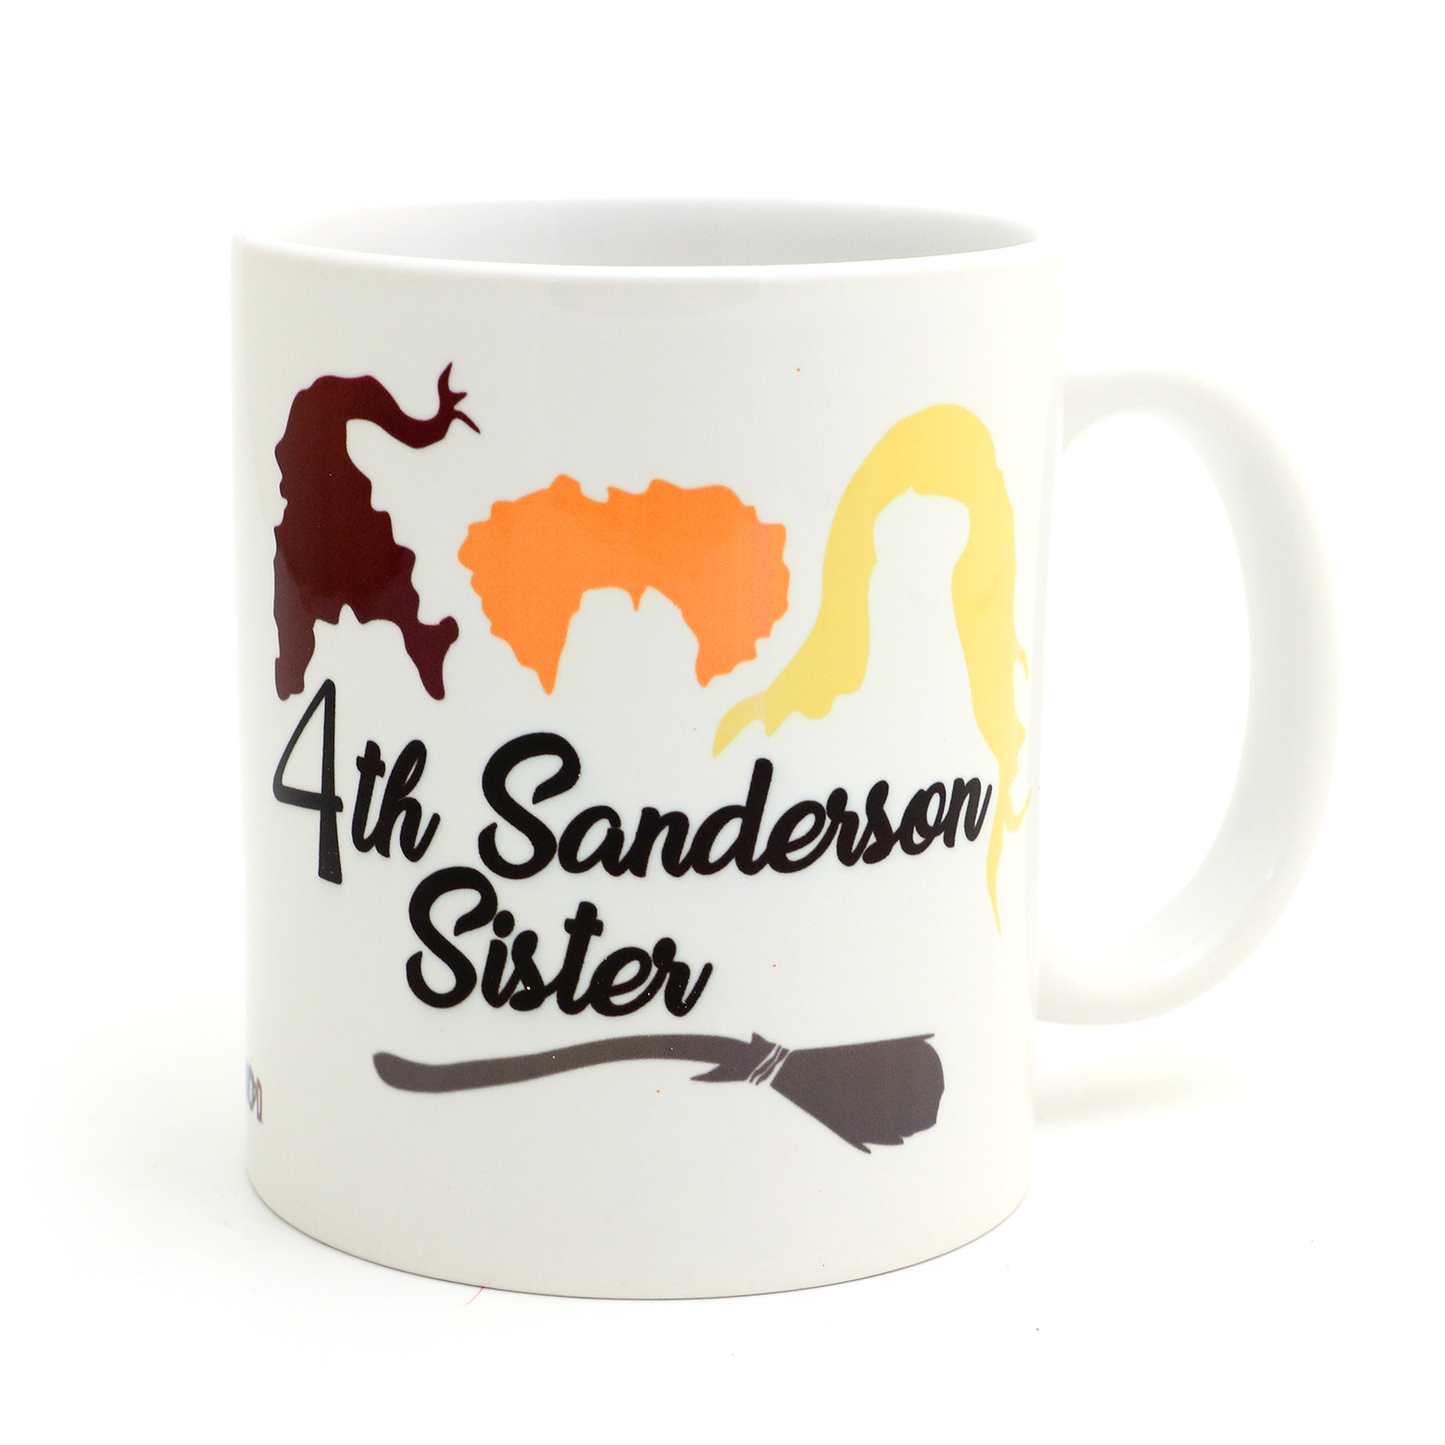 4th Sanderson Sister Funny Halloween Hocus Pocus Mug